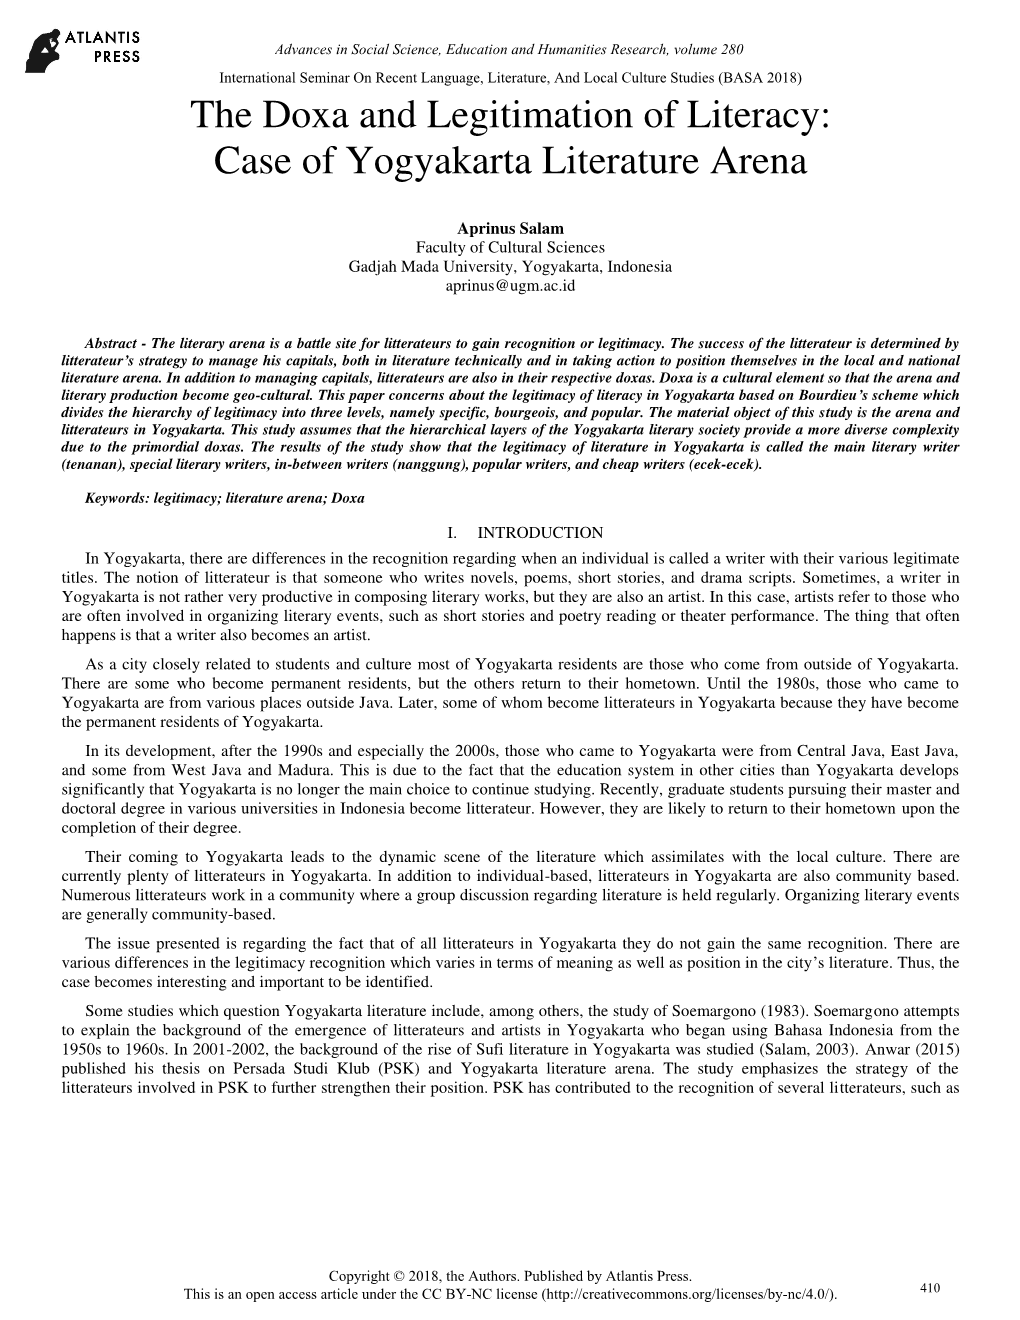 The Doxa and Legitimation of Literacy: Case of Yogyakarta Literature Arena